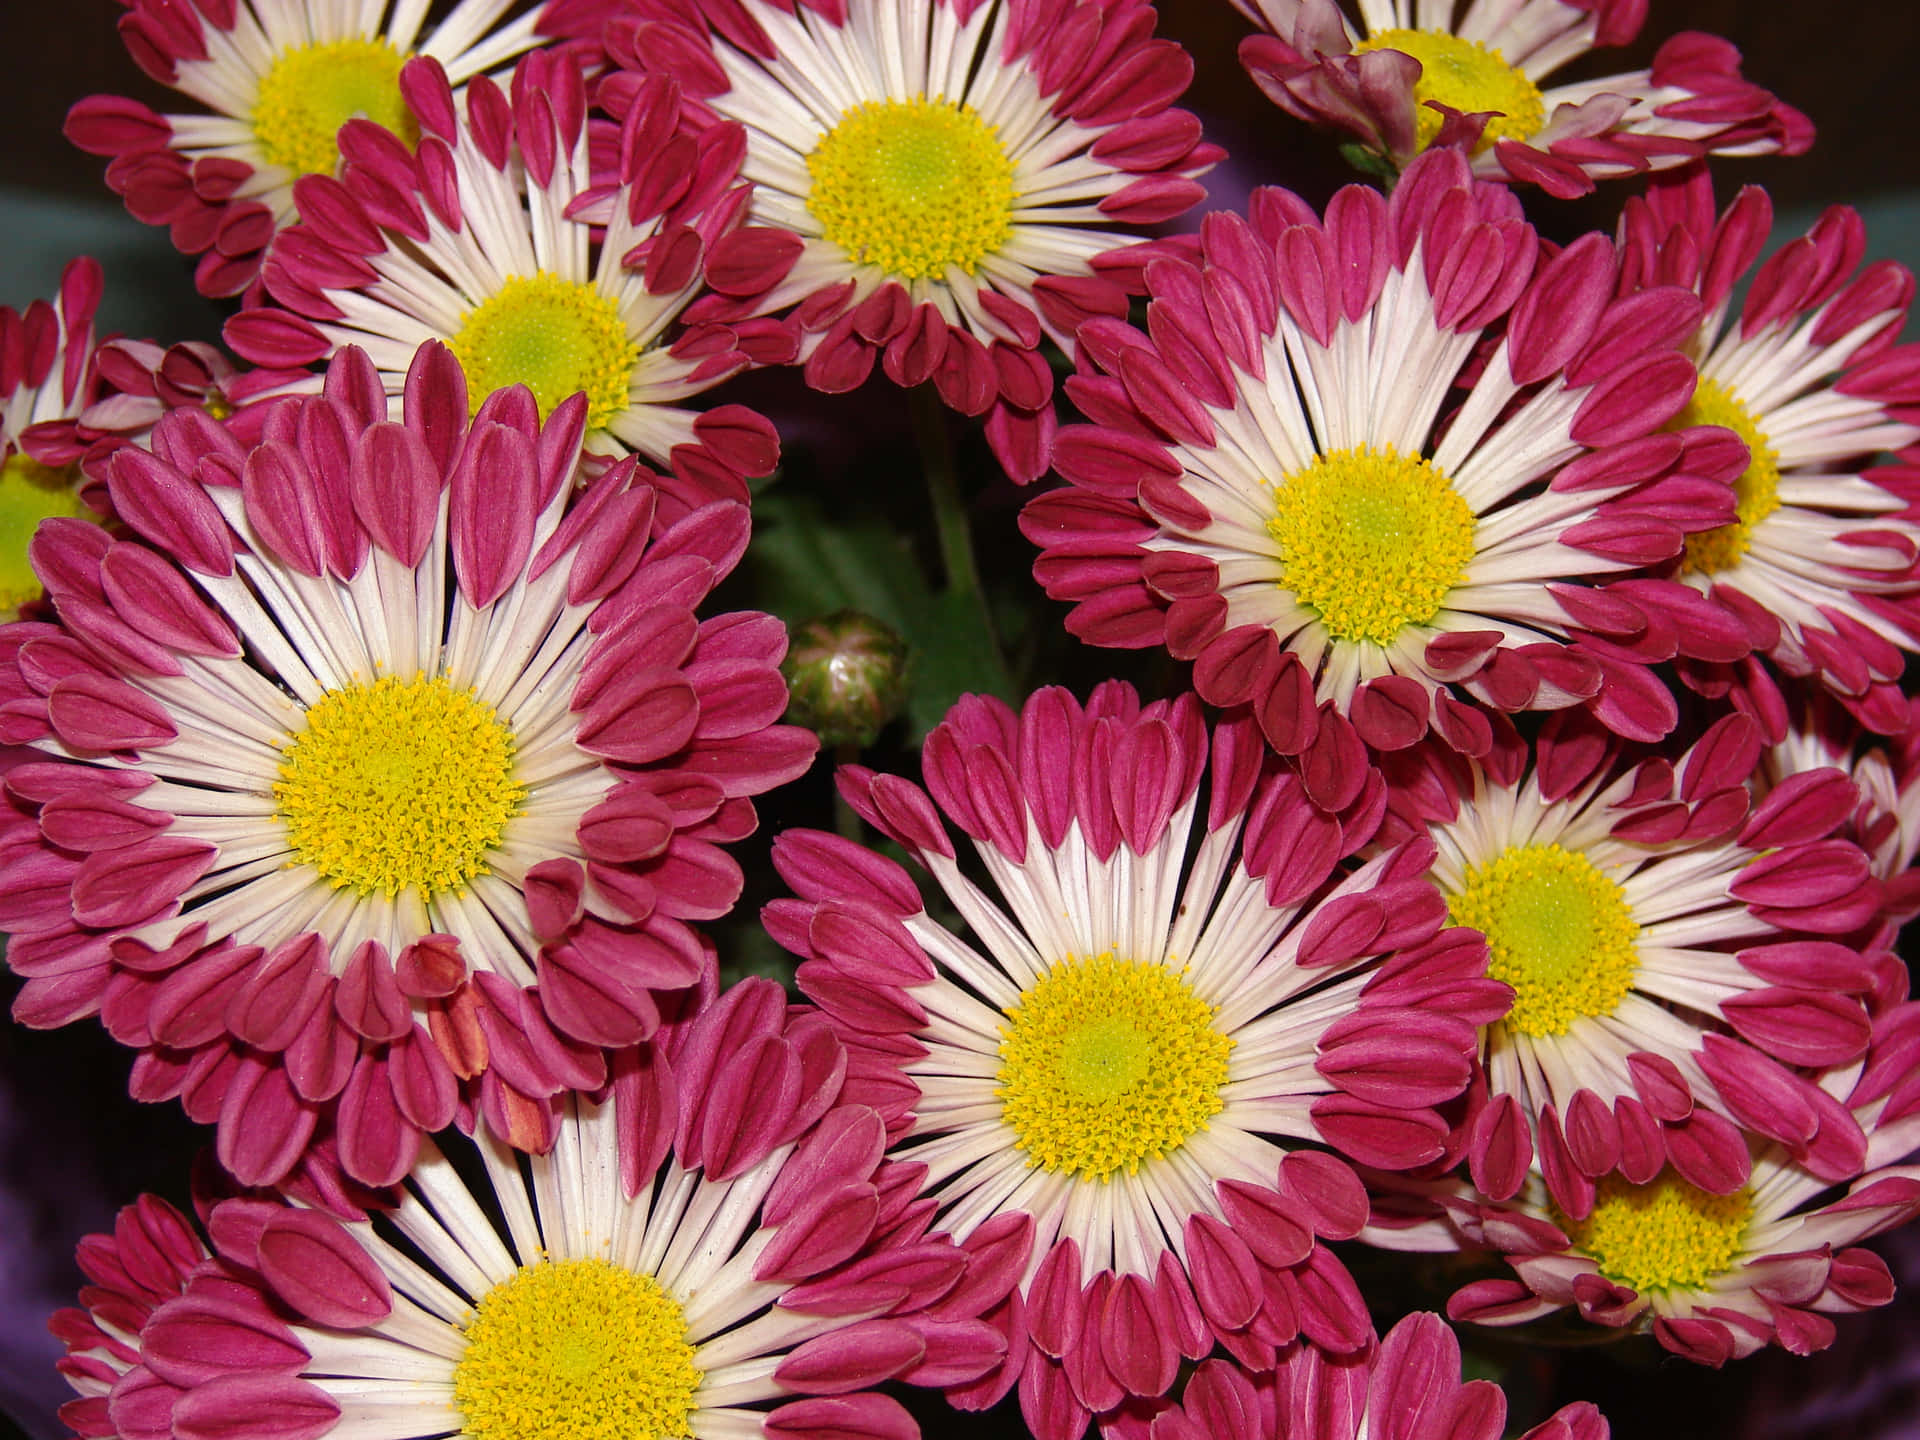 A vibrant arrangement of chrysanthemum flowers.